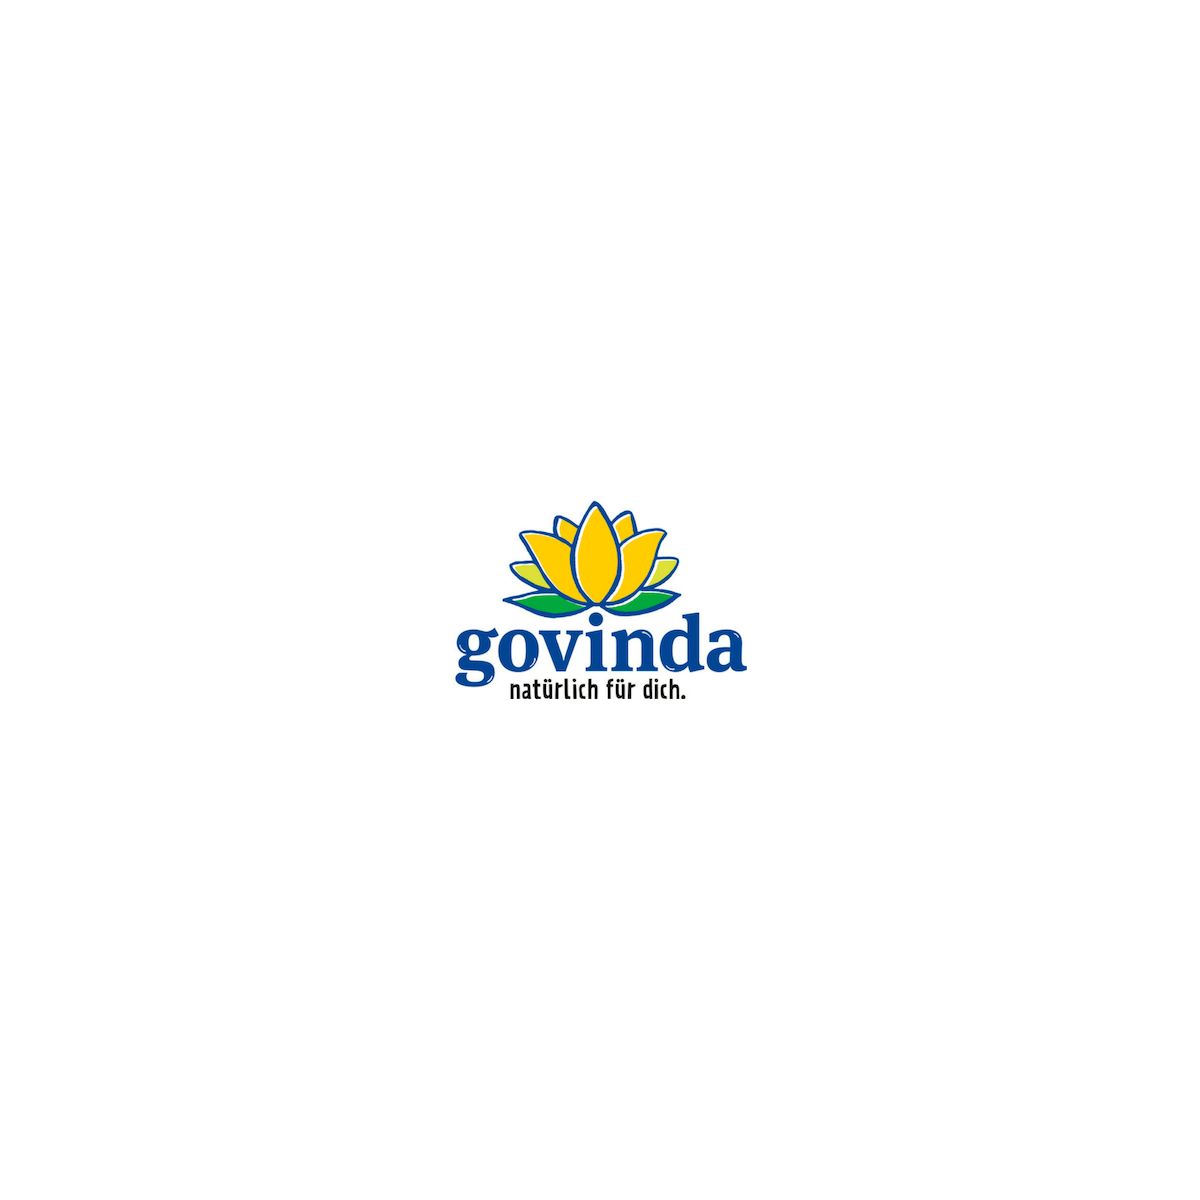  Govinda - Besondere vegane Naturprodukte...